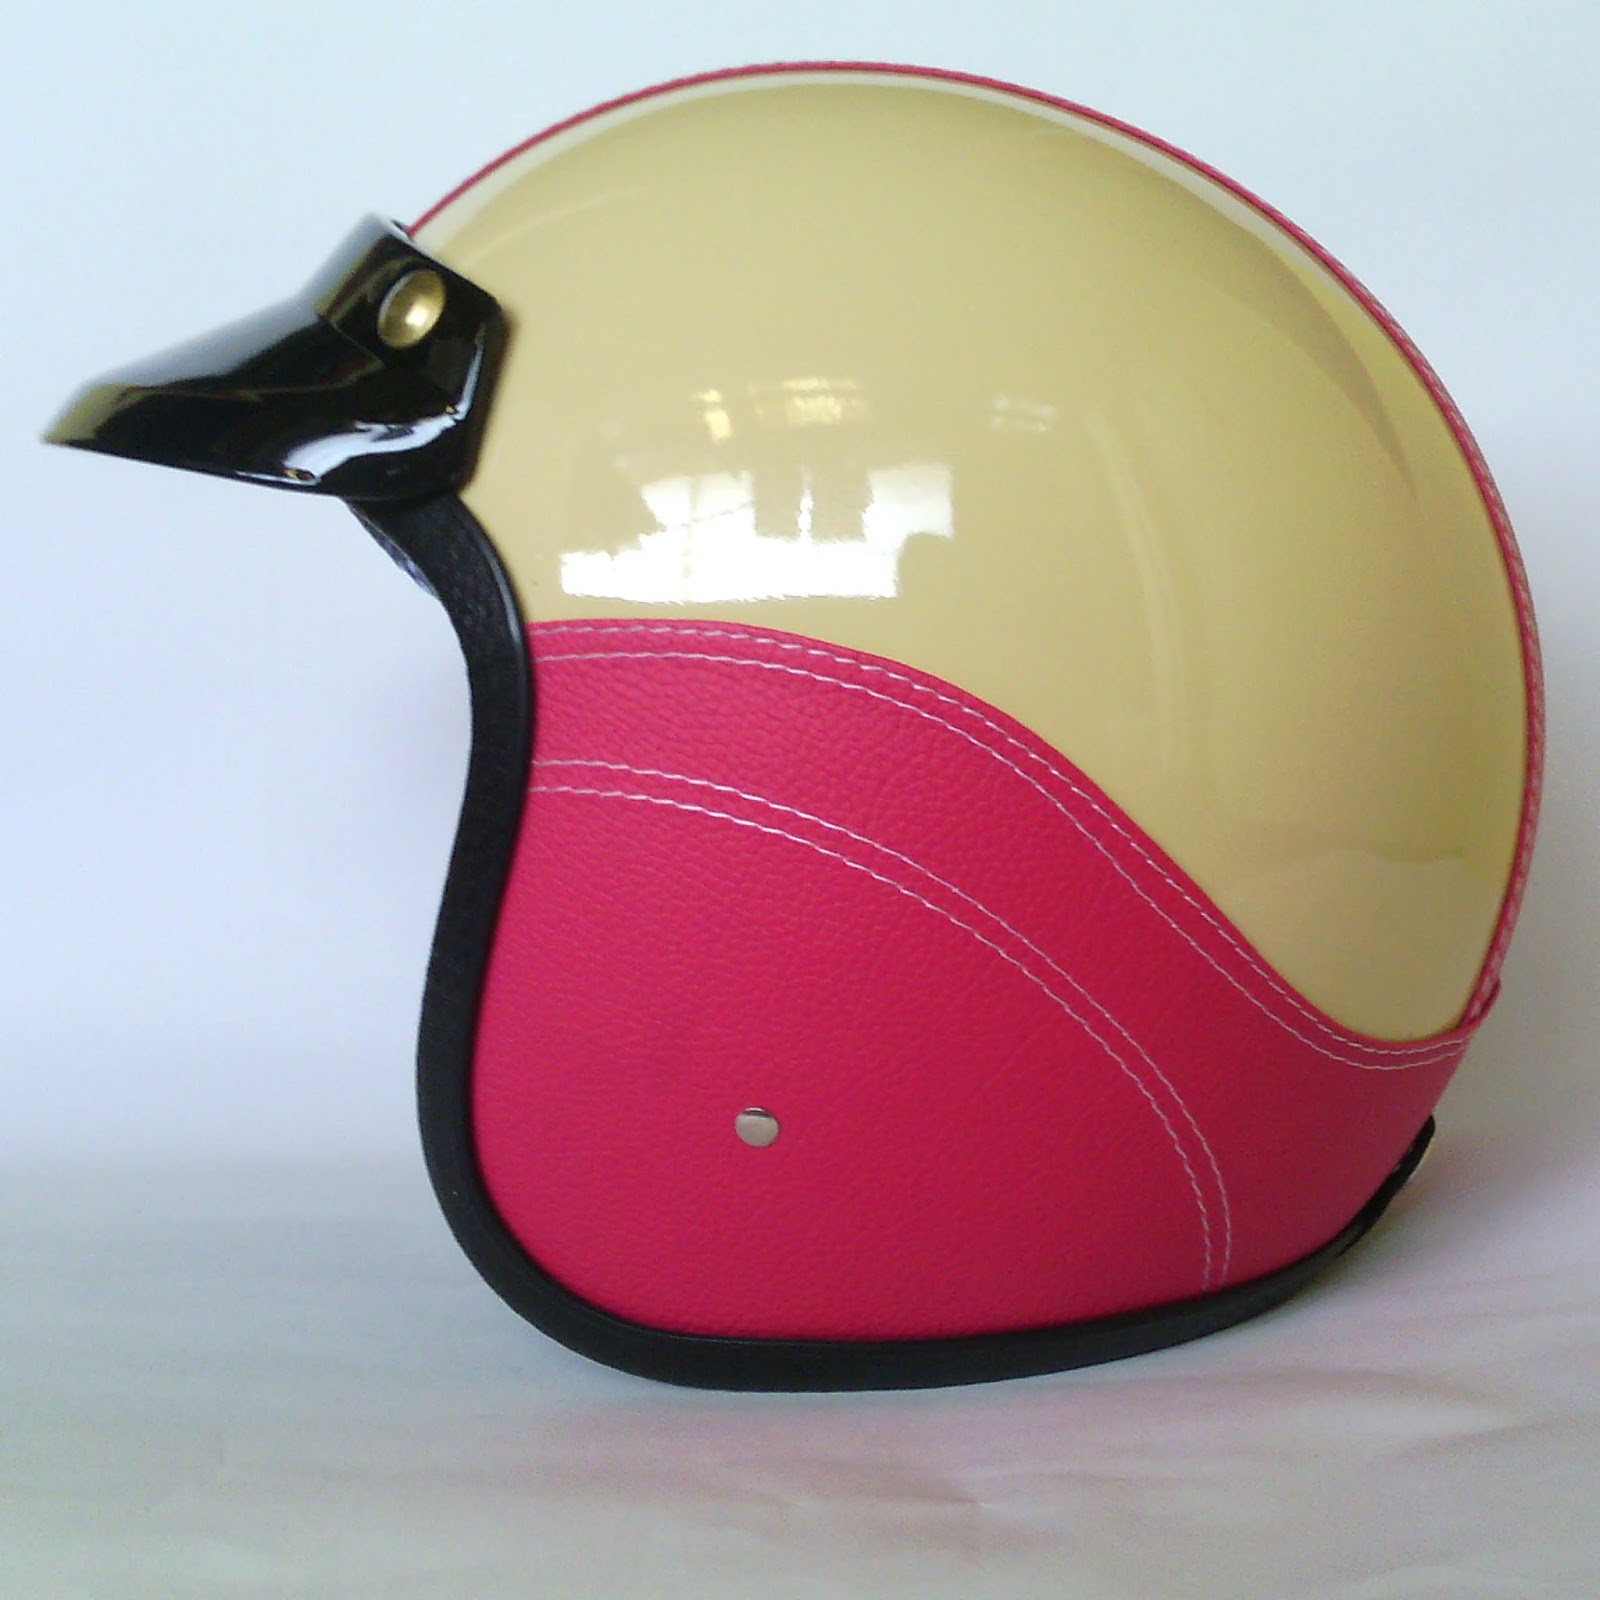 Helm Retro Pakai Pet Helm Untuk Cb Vespa Chopper Dan Motor Klasik